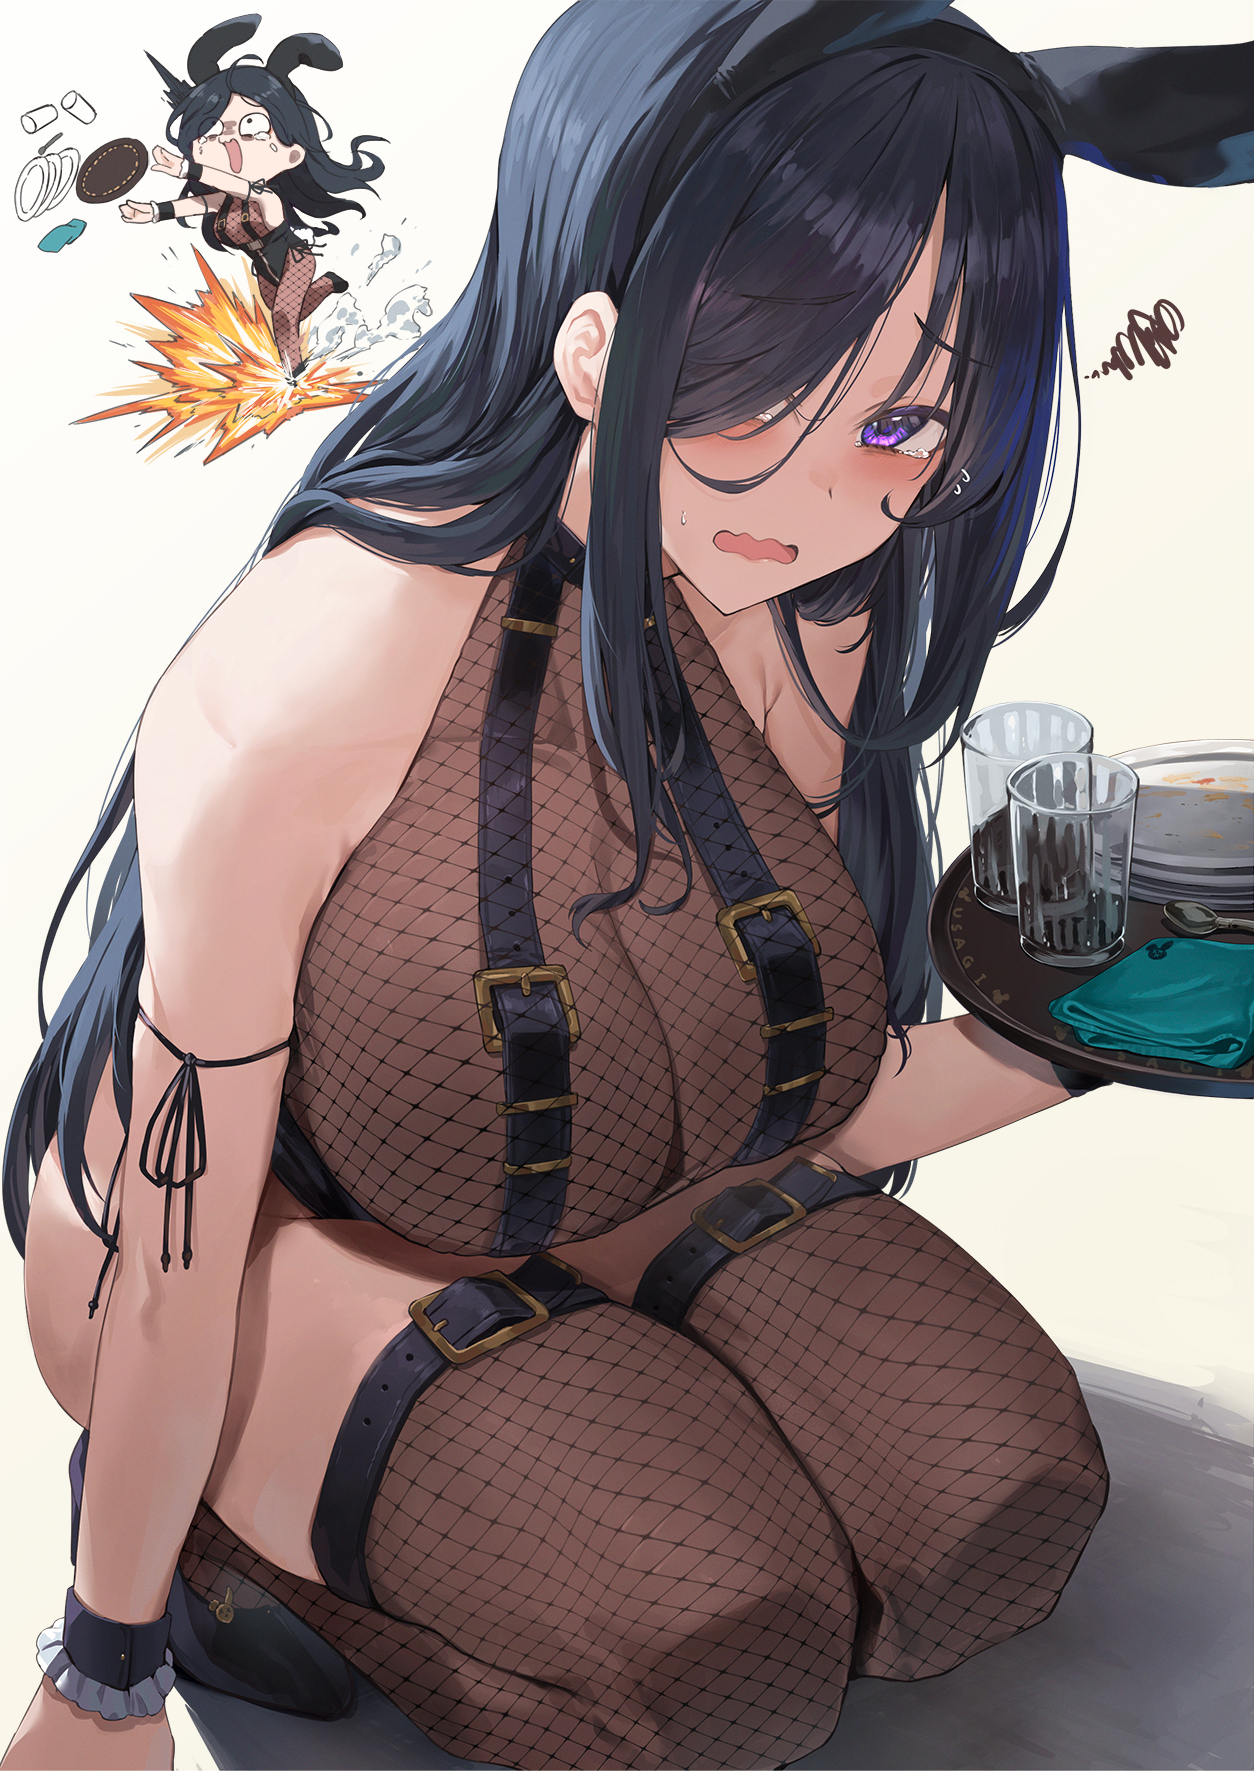 Anime 1254x1771 anime anime girls huge breasts fishnet kneeling bunny ears waitress Neshia artwork cleavage